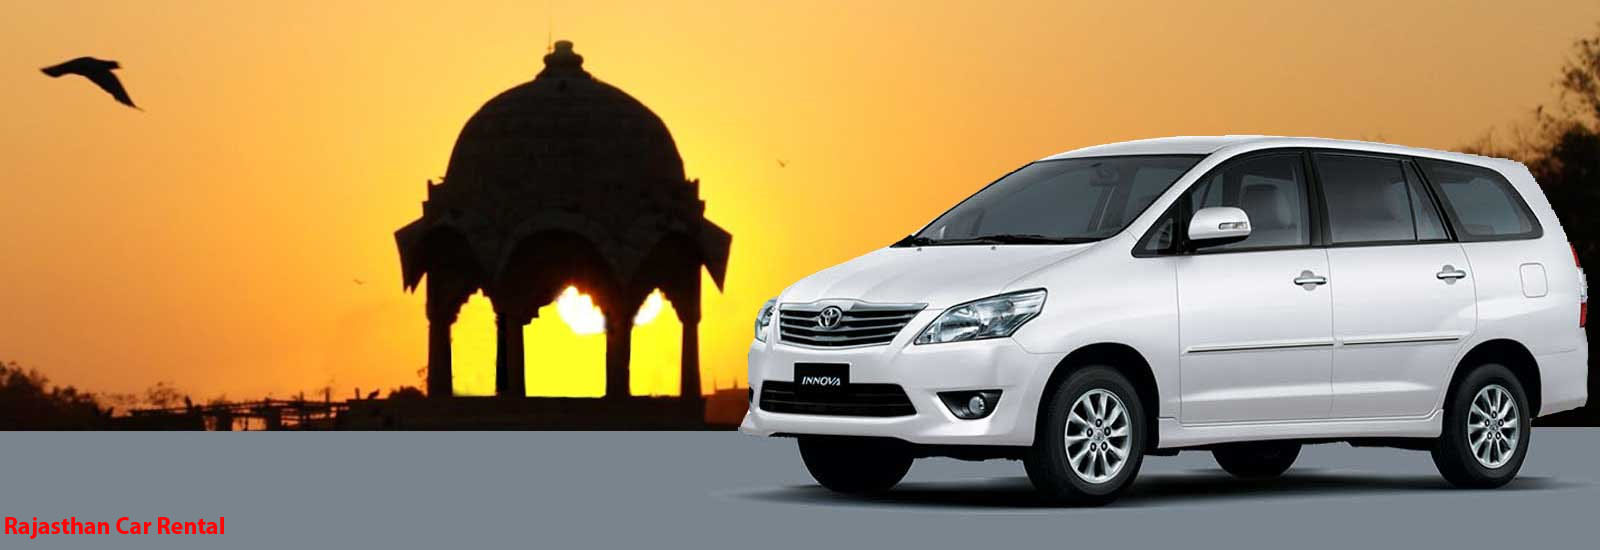 Rajasthan Car Rental